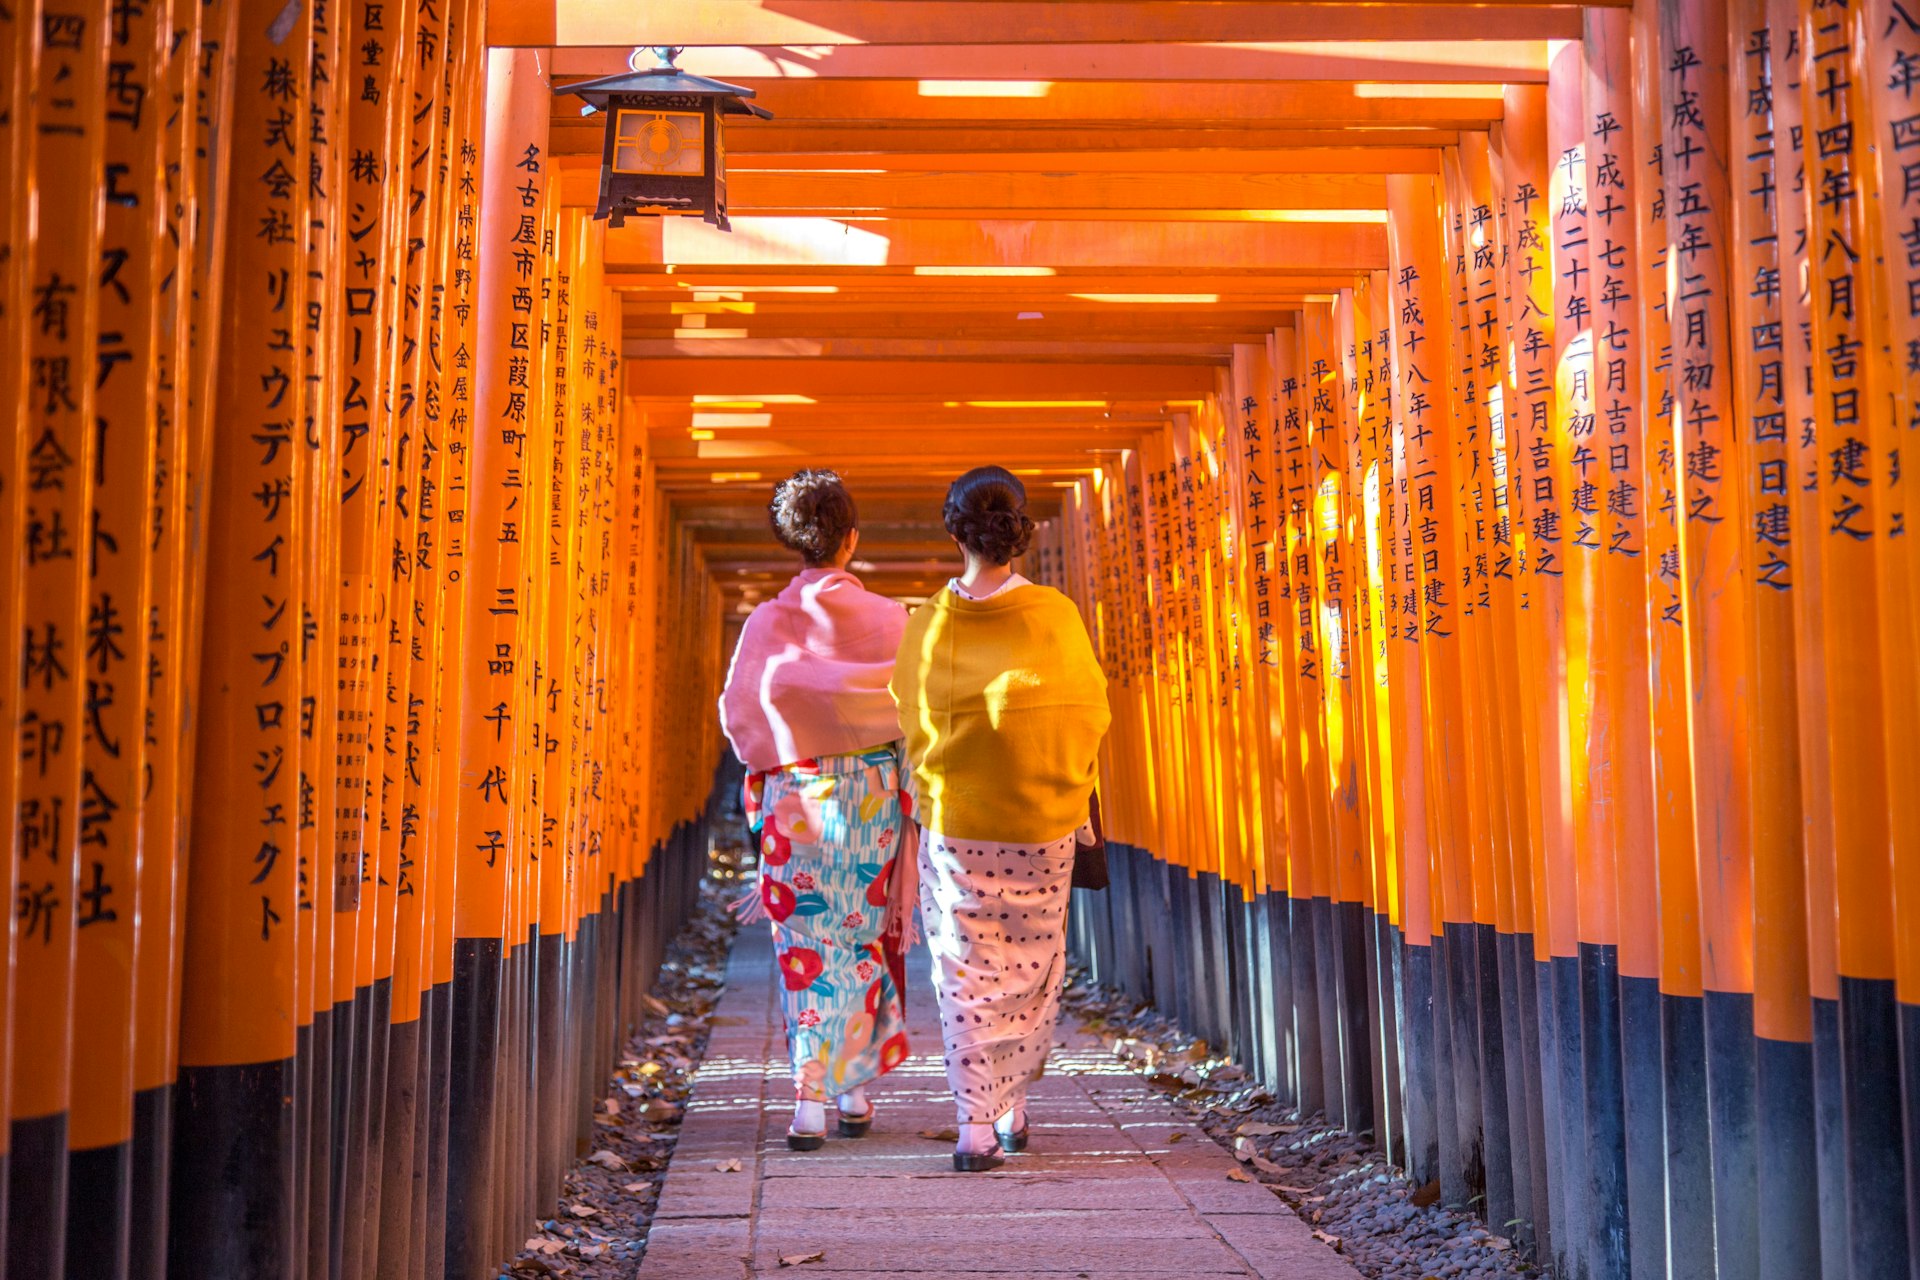 Two women in traditional Japanese clothing walking through torii gates at Fushimi Inari Shrine